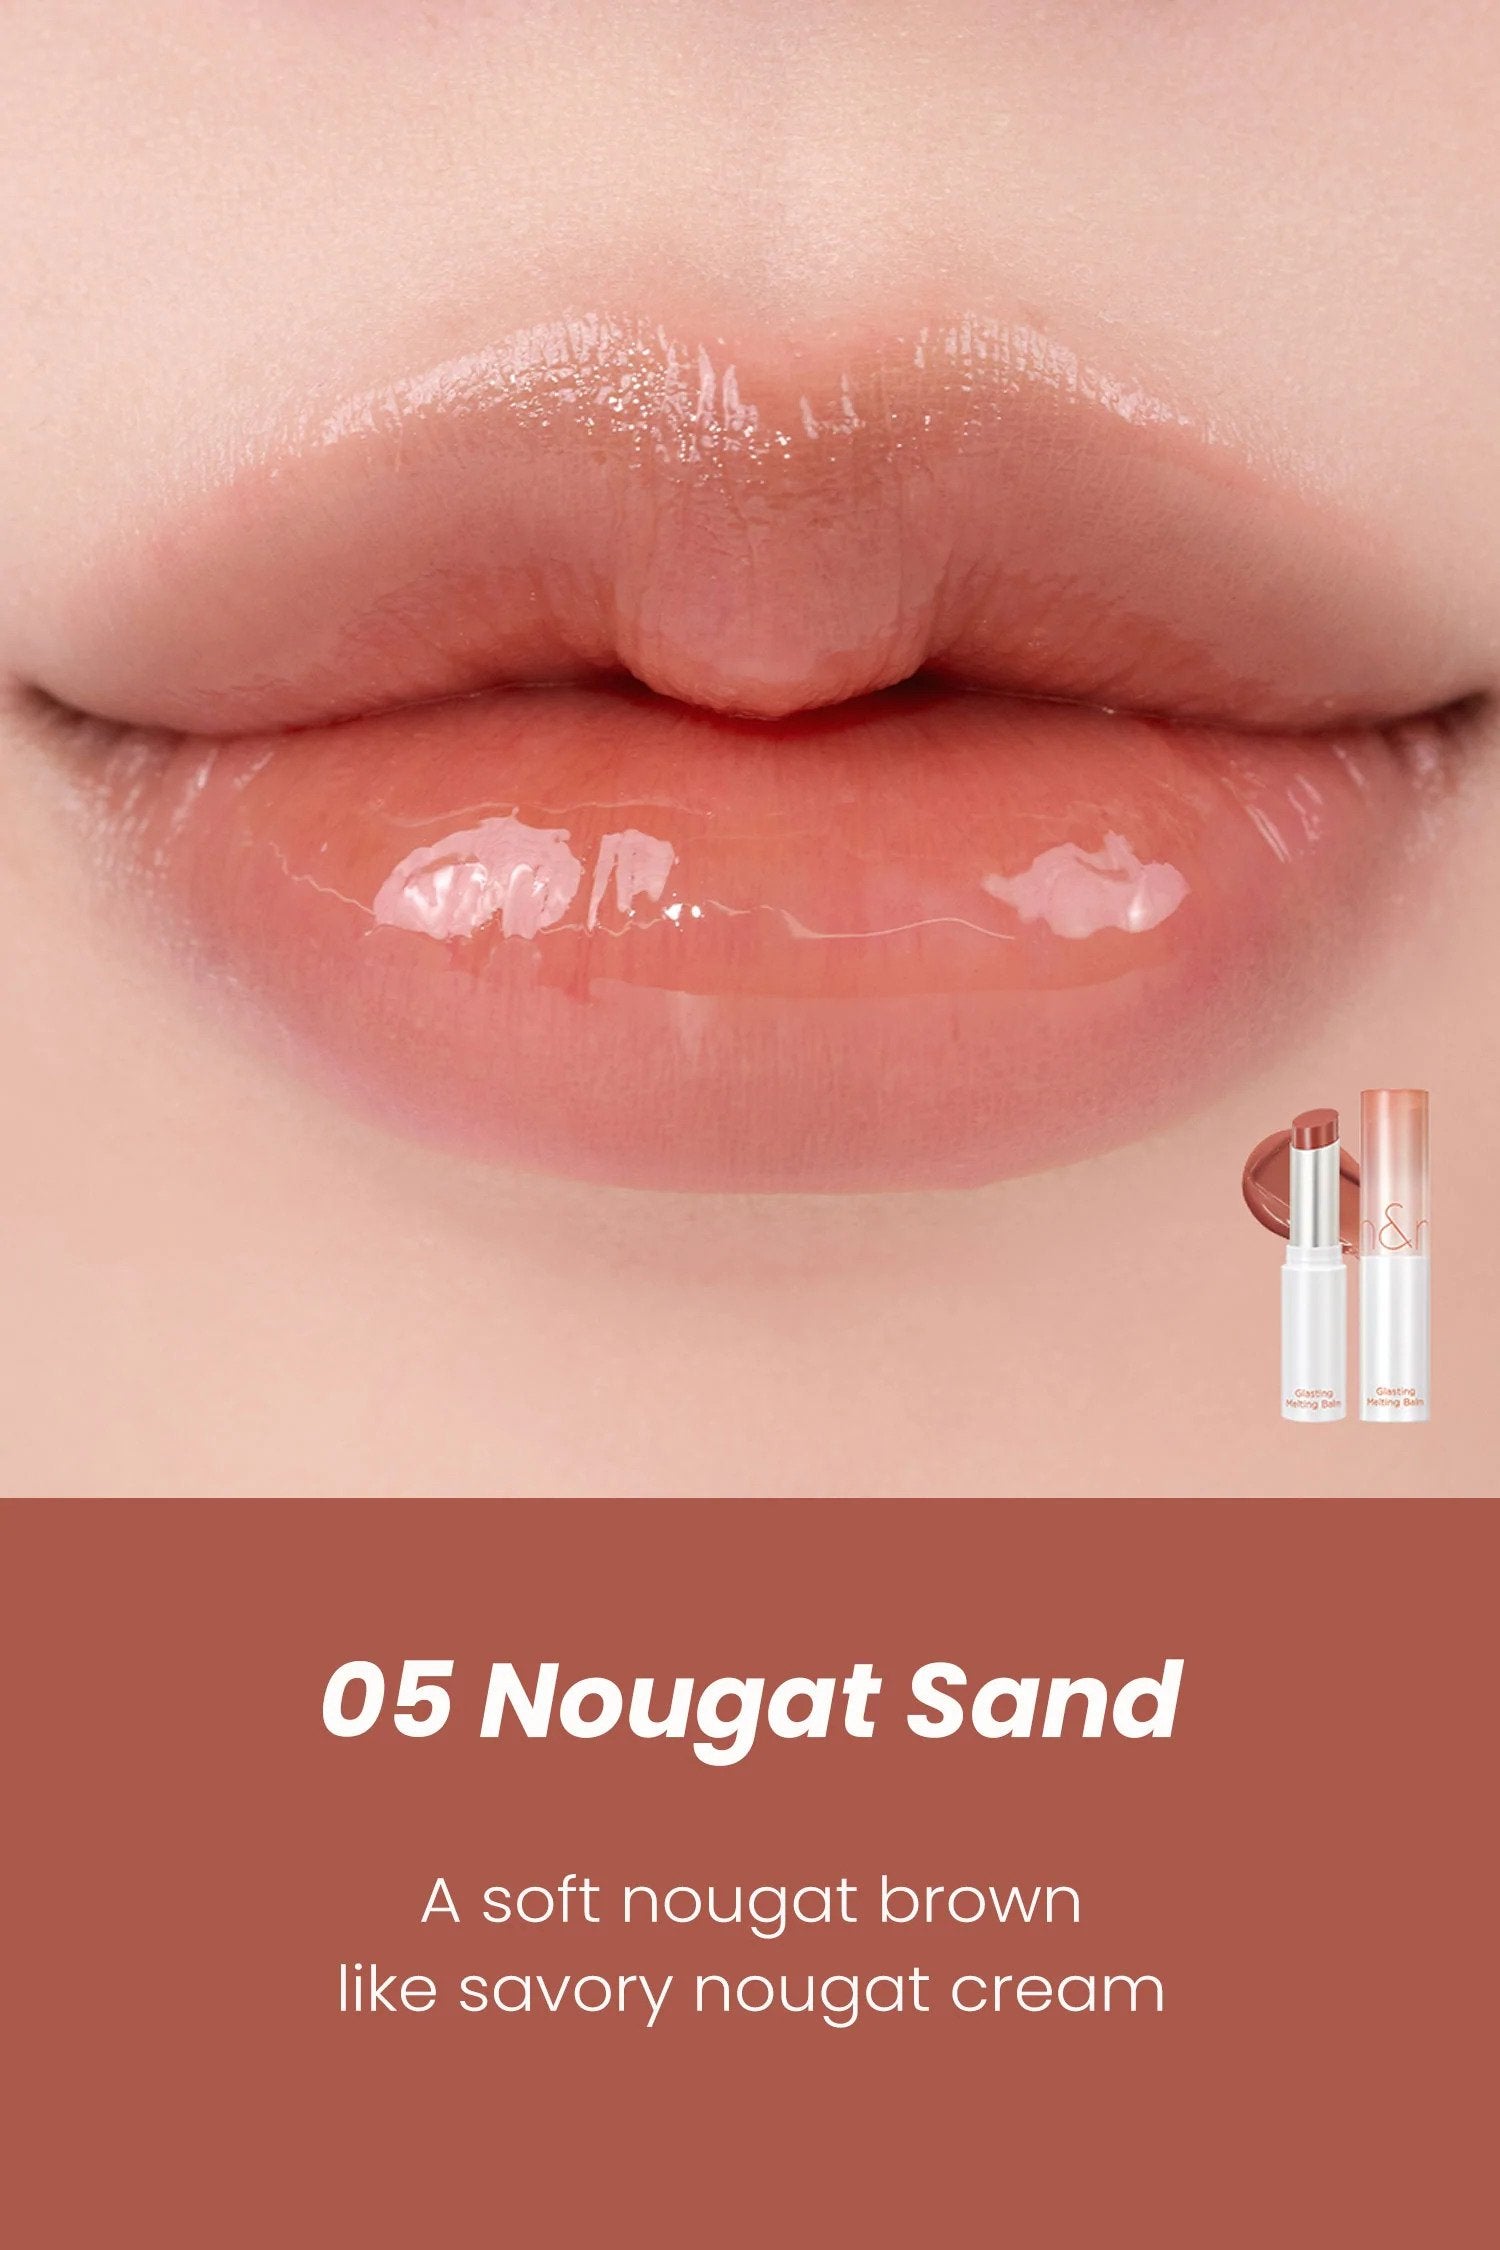 Rom&nd - Glasting Melting Balm 05 Nougat Sand - بالم الزجاجي رقم 05 من روماند